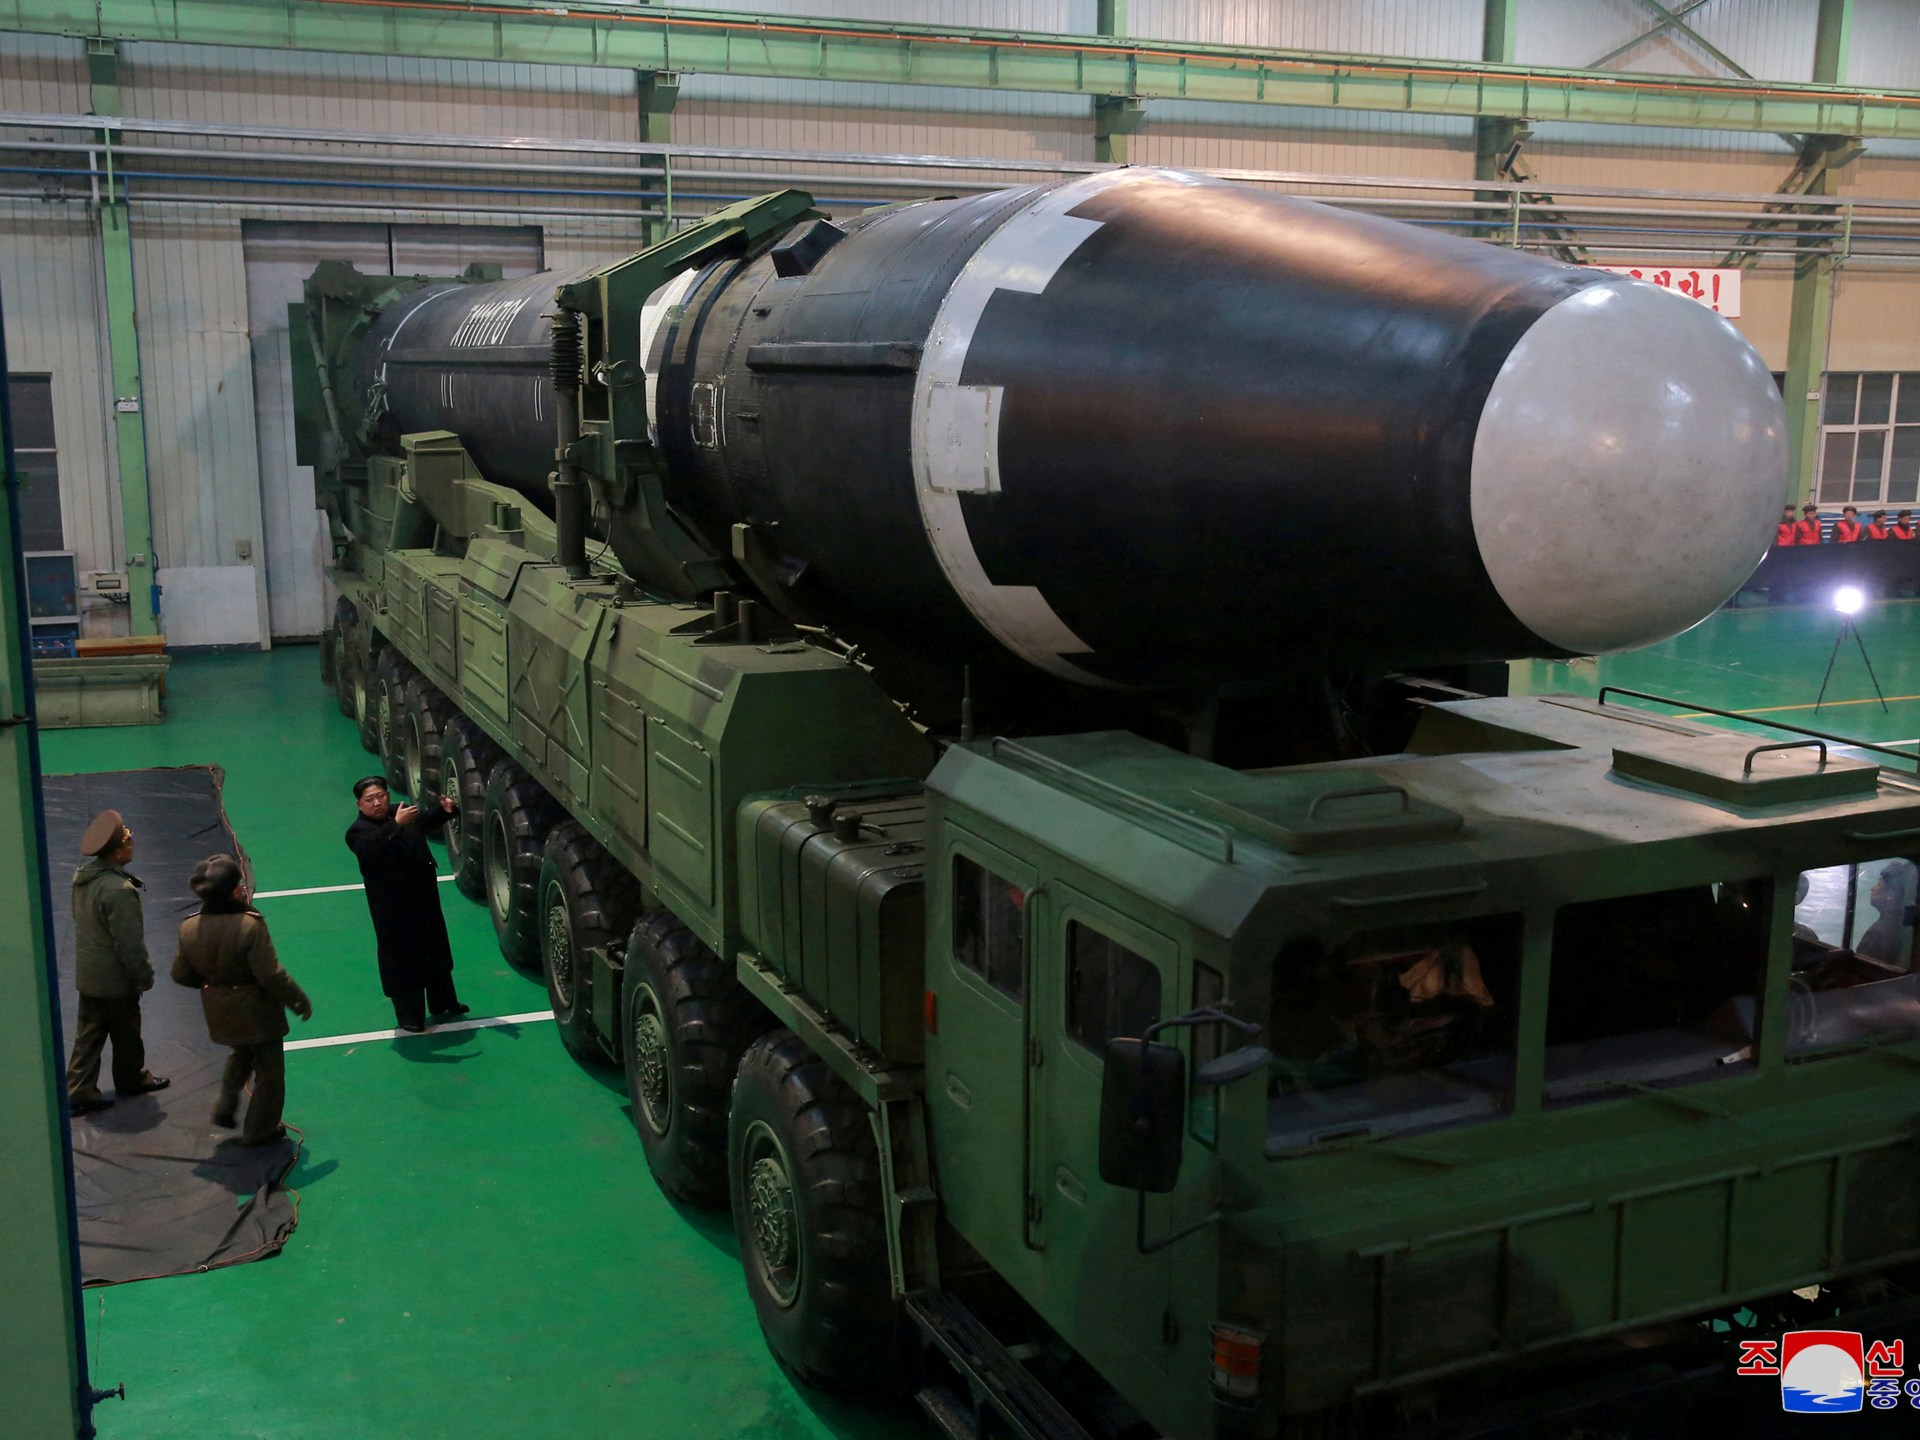 N Korea confirms ICBM test, touts nuclear counterattack ability – Al Jazeera English